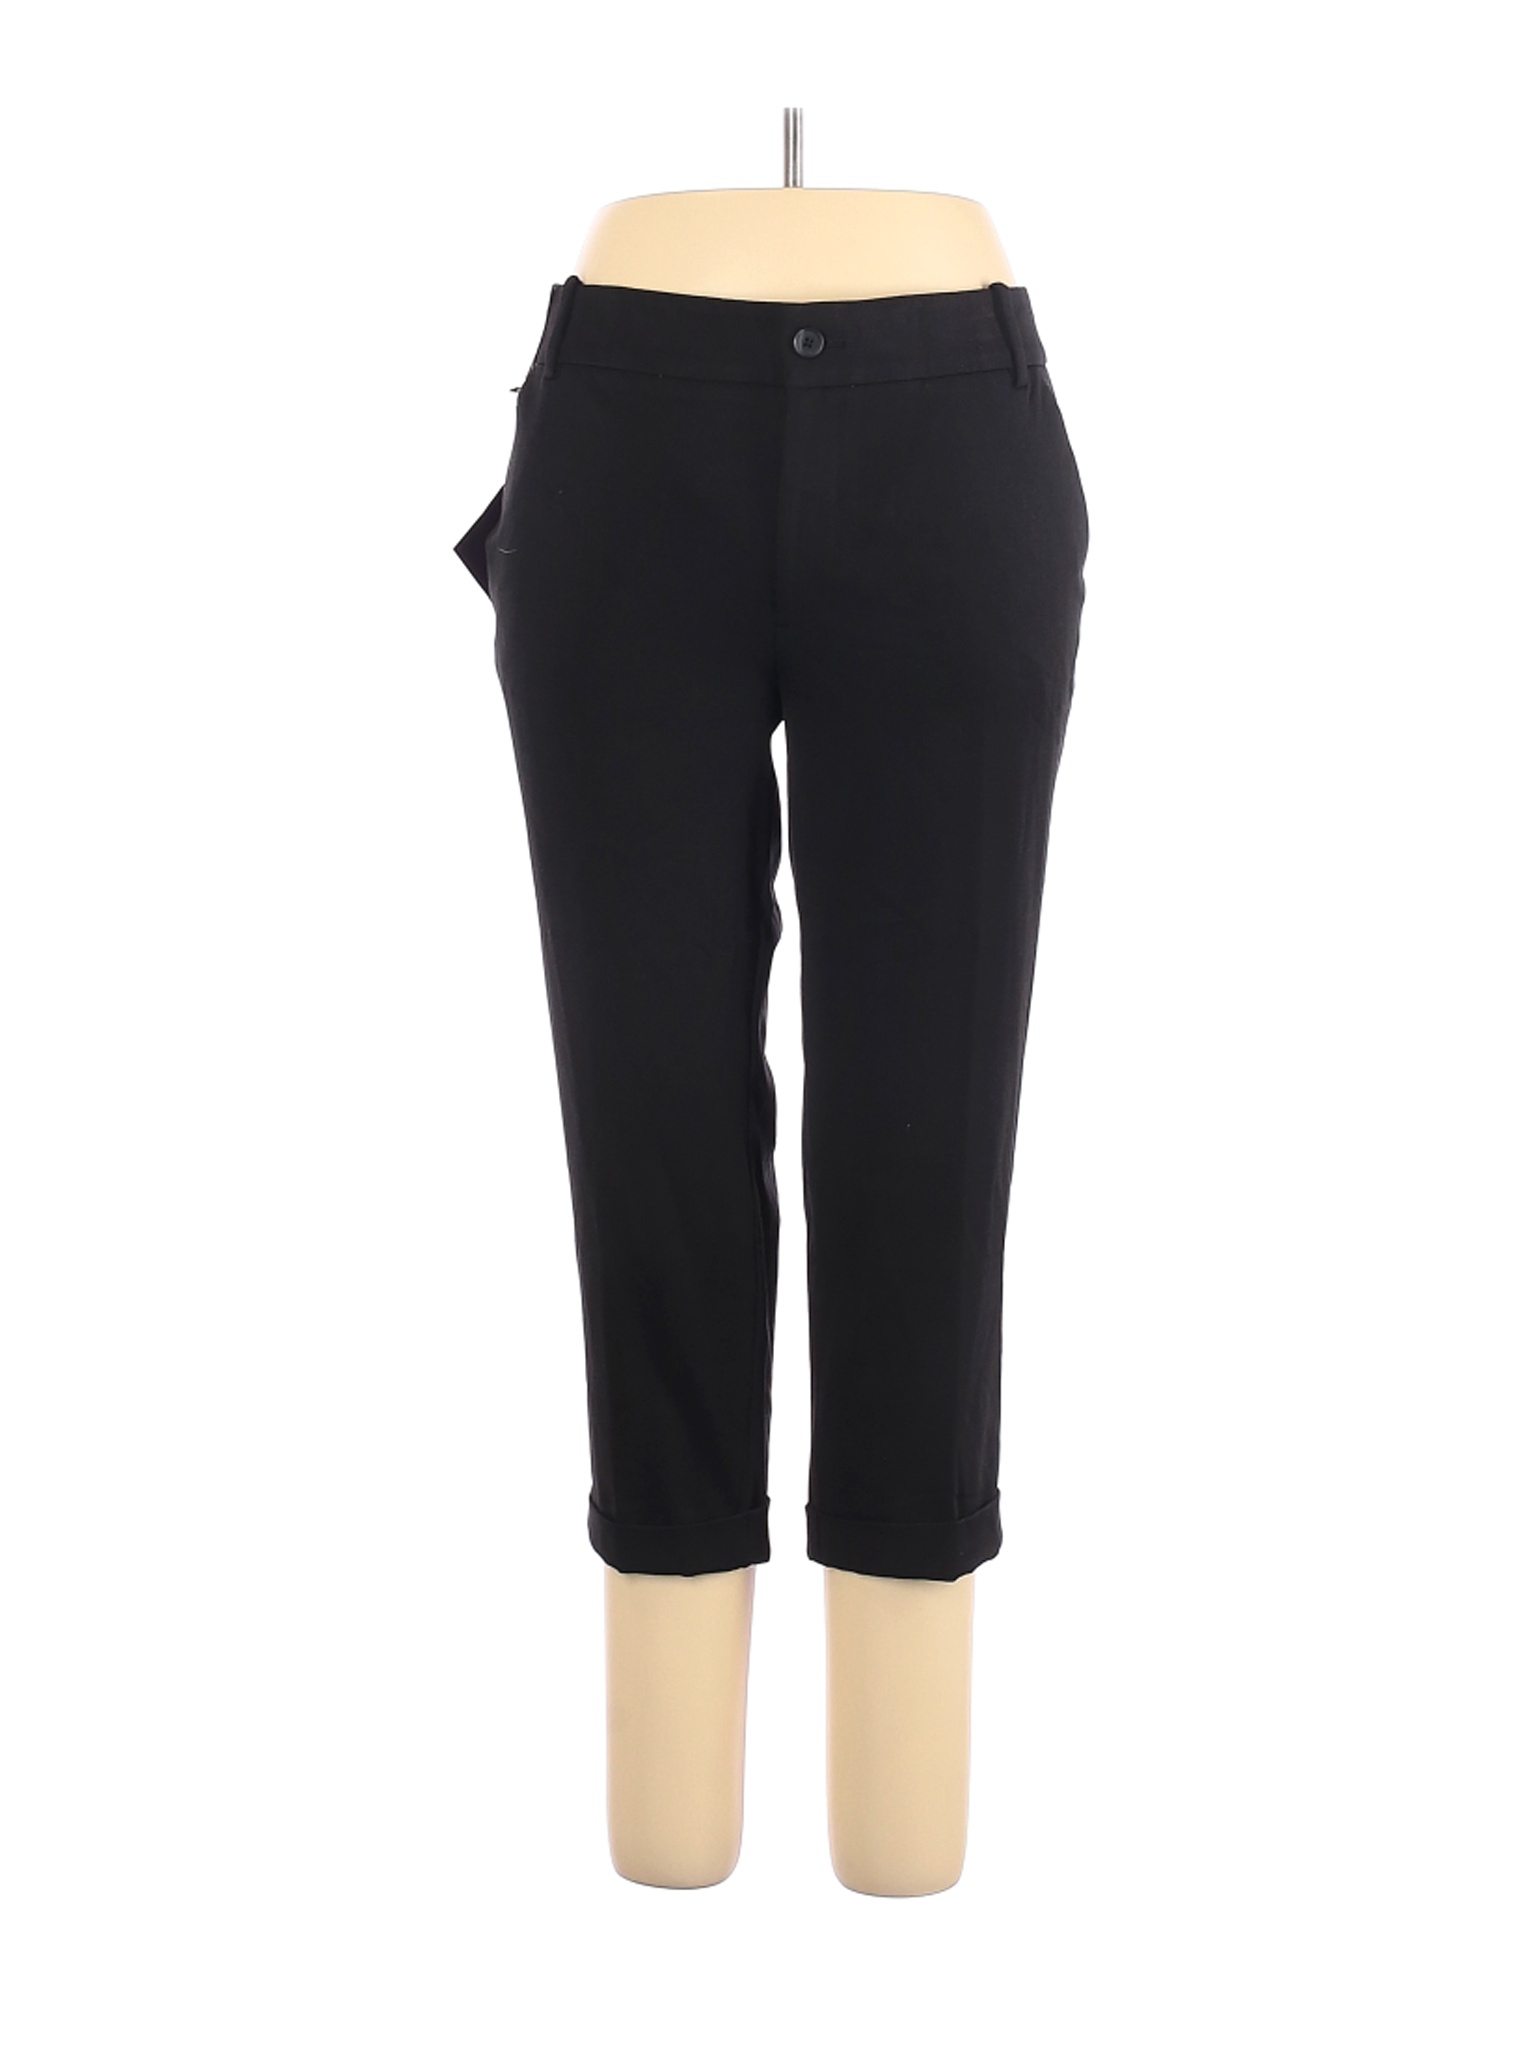 NWT Ava & Viv Women Black Dress Pants 14 | eBay